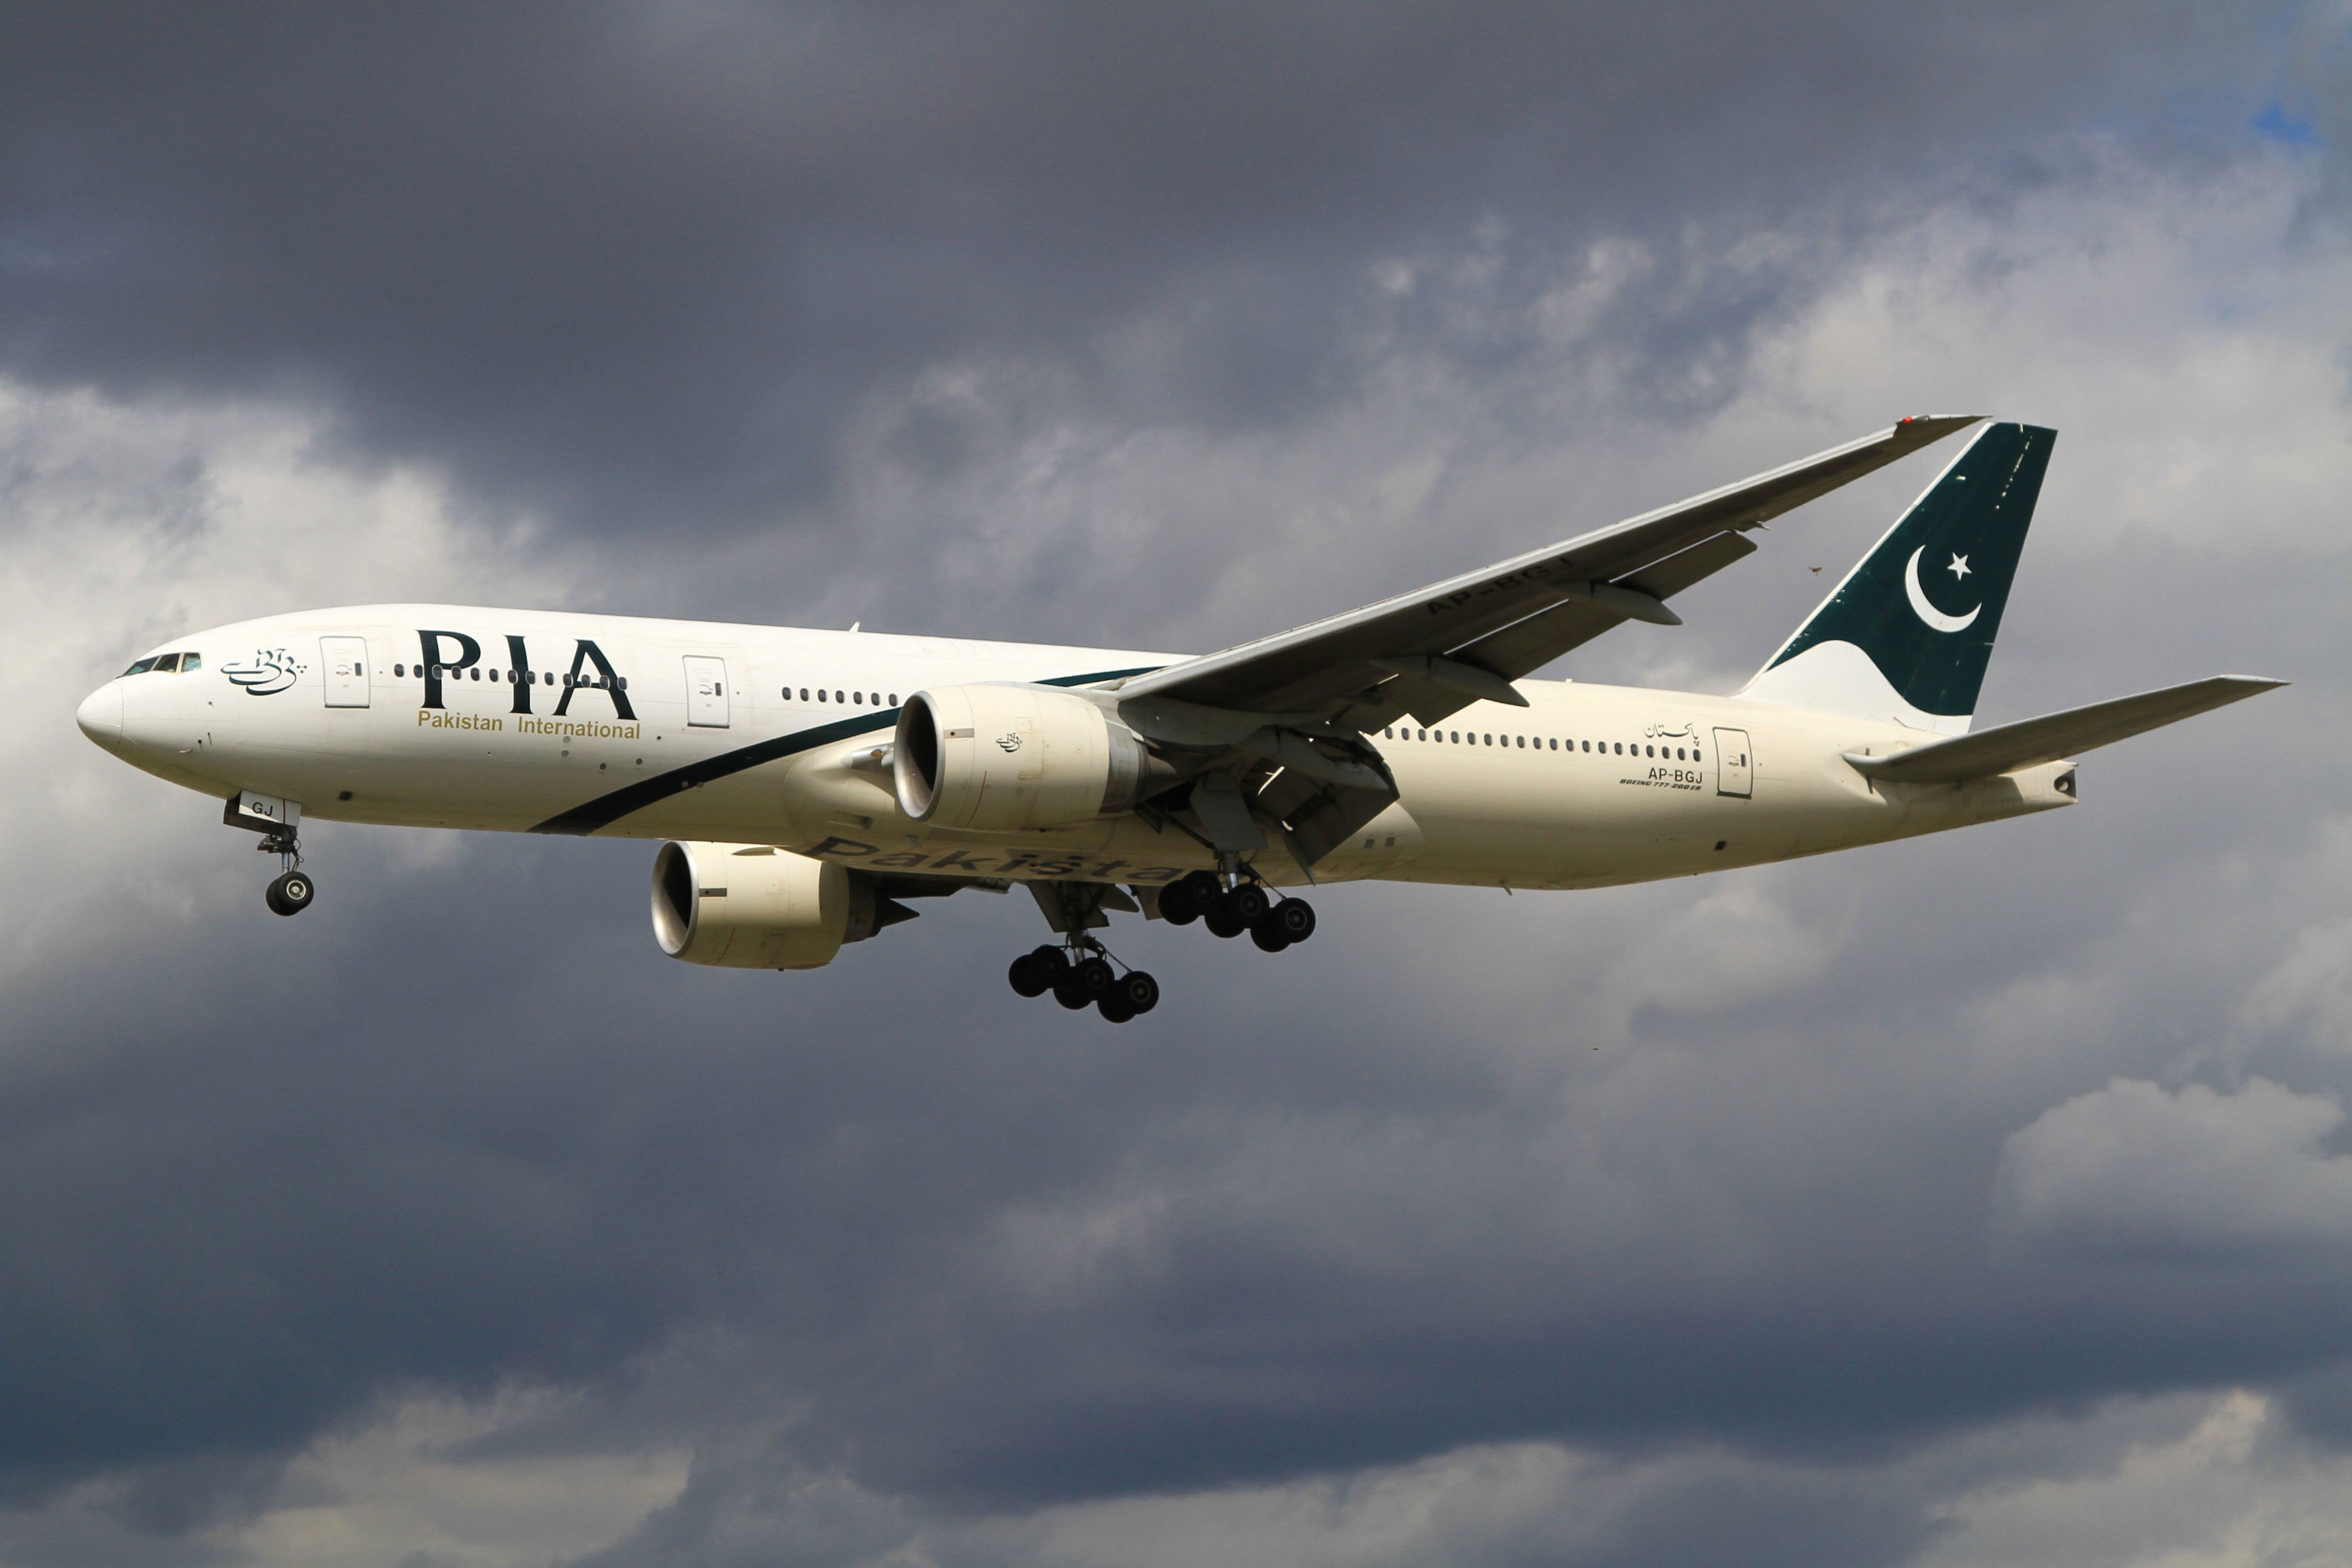 pia boeing 777 returns to karachi following engine failure